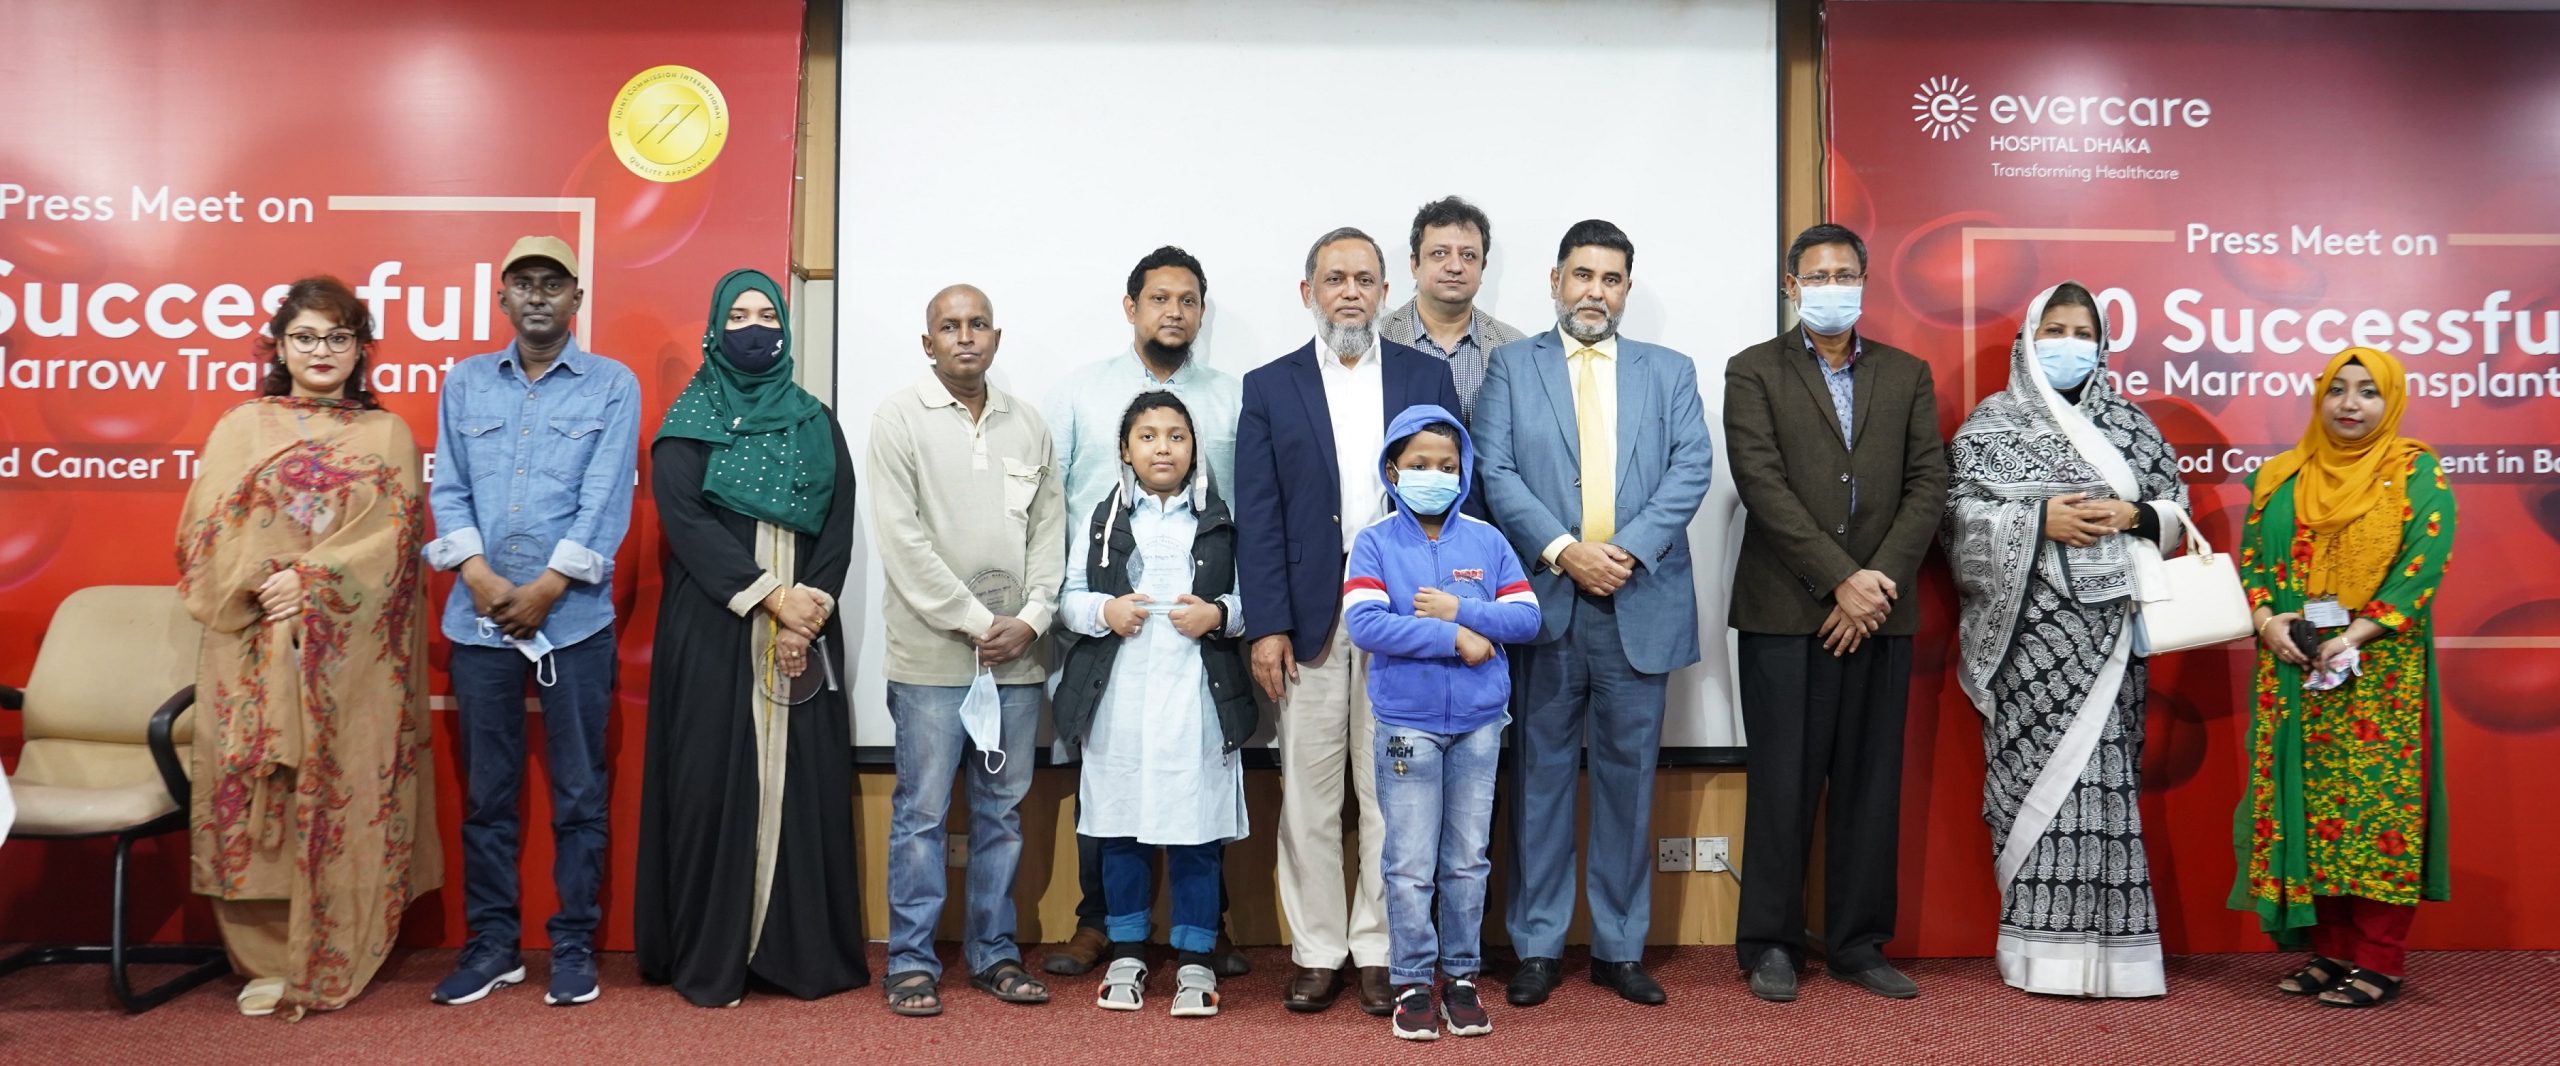 Evercare Hospital Dhaka Completes 50 Blood and Marrow Transplants